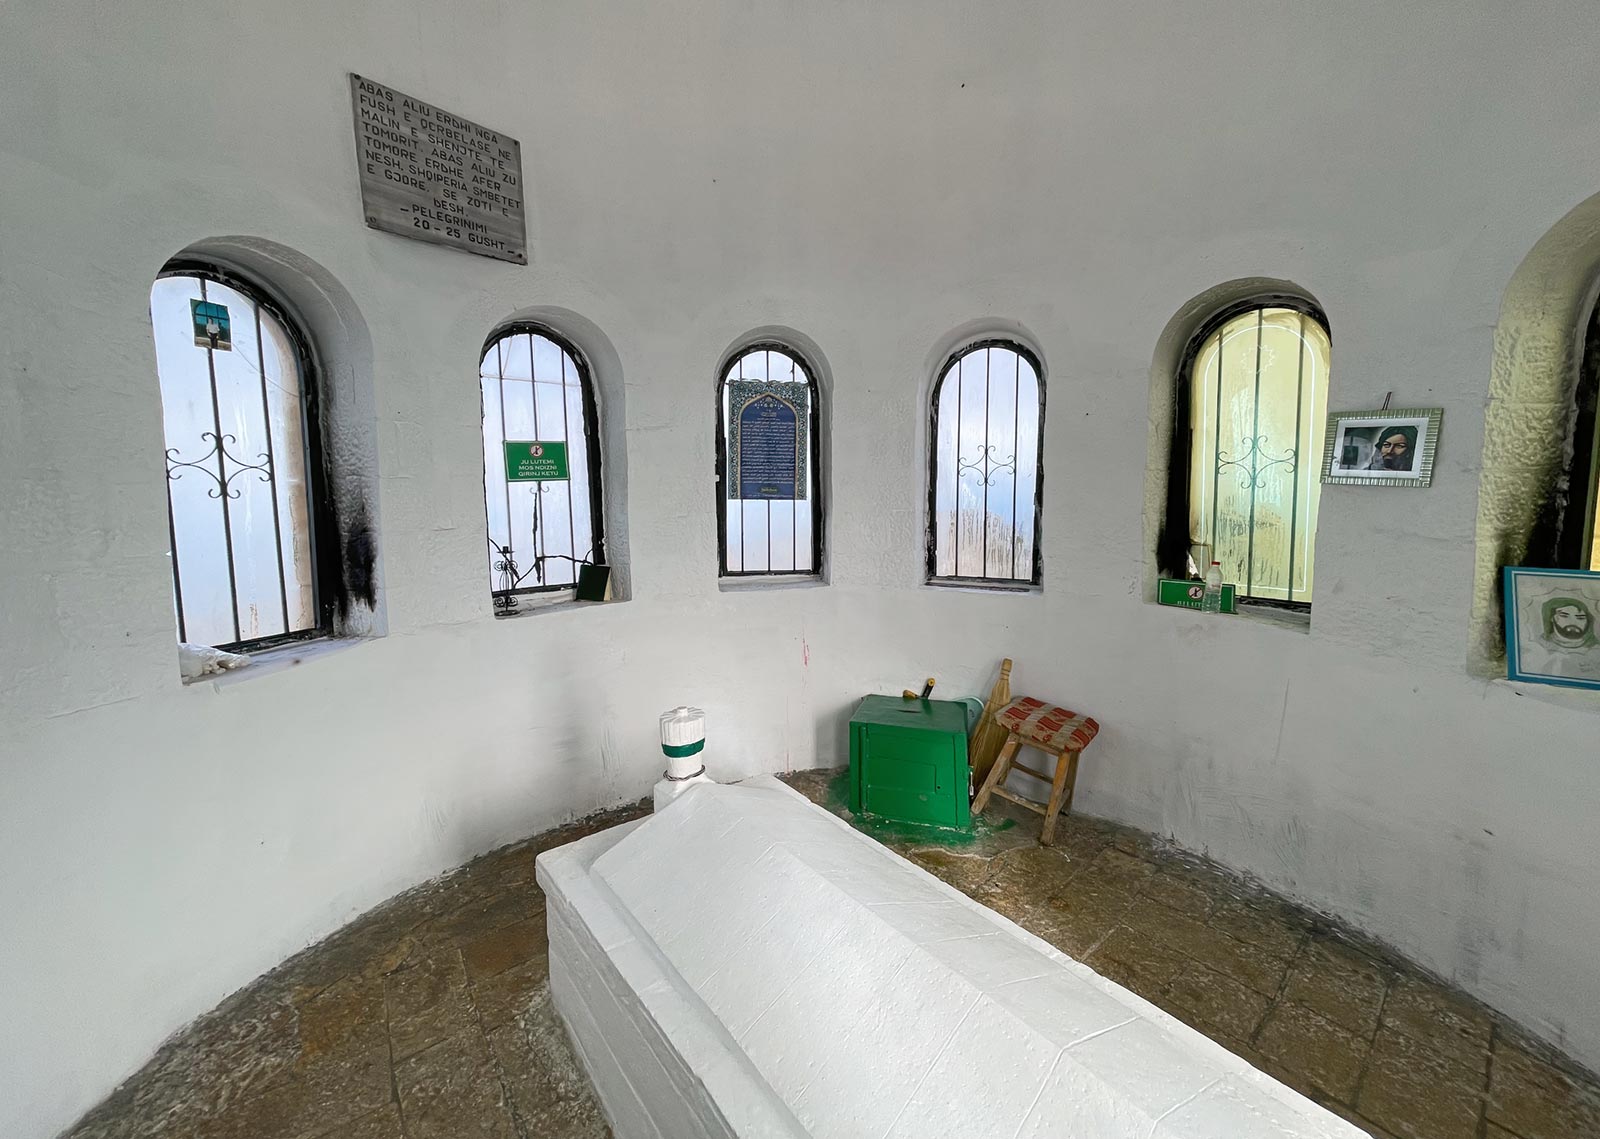 Abaz Aliun mausoleumi, Tomorr-vuori